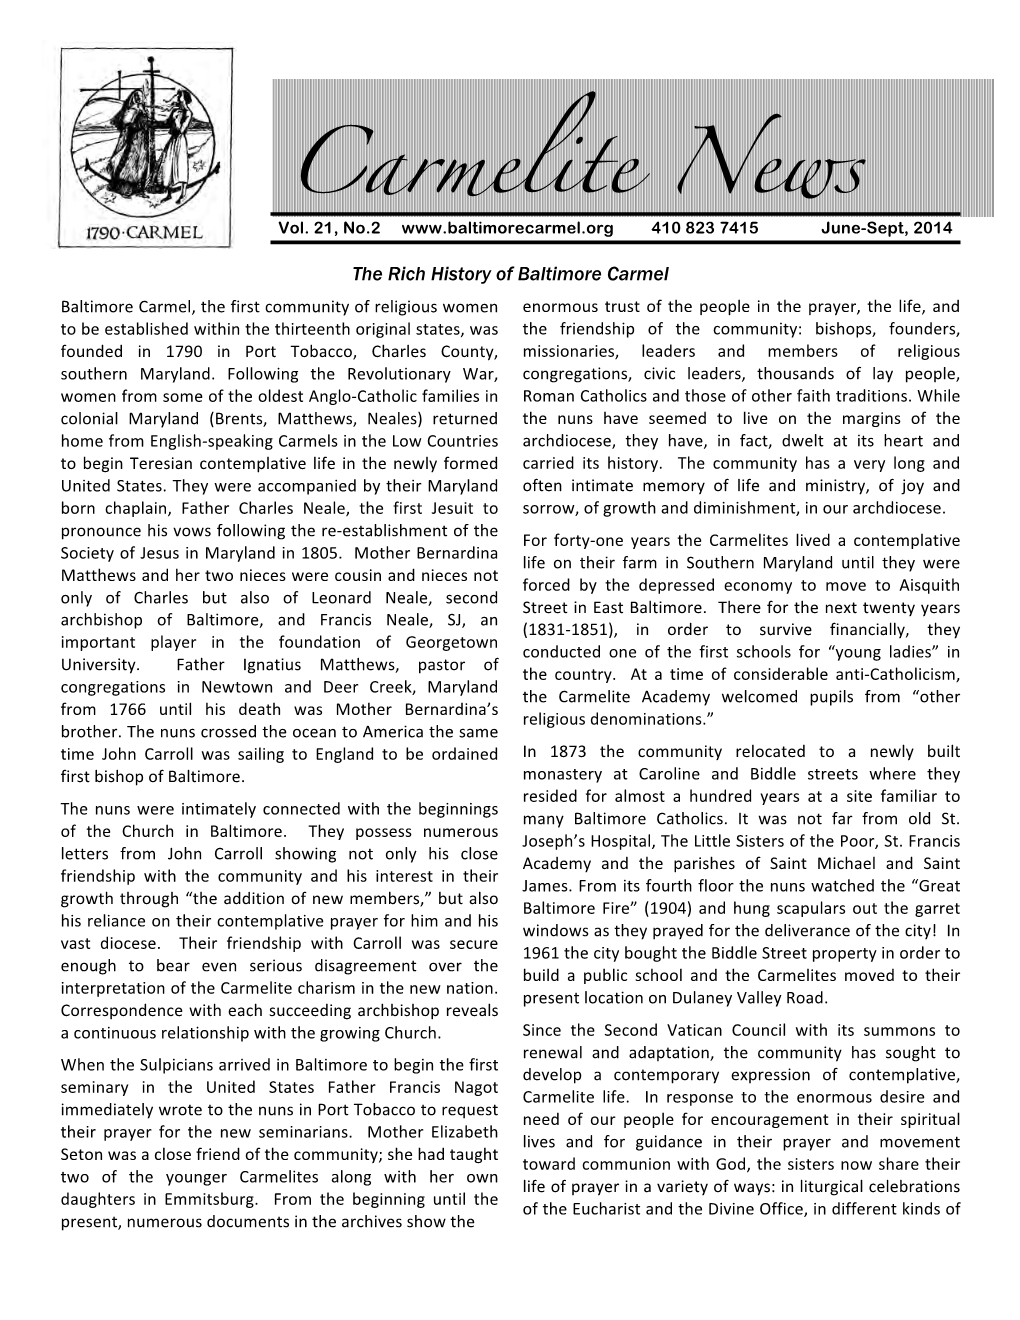 Carmelite News